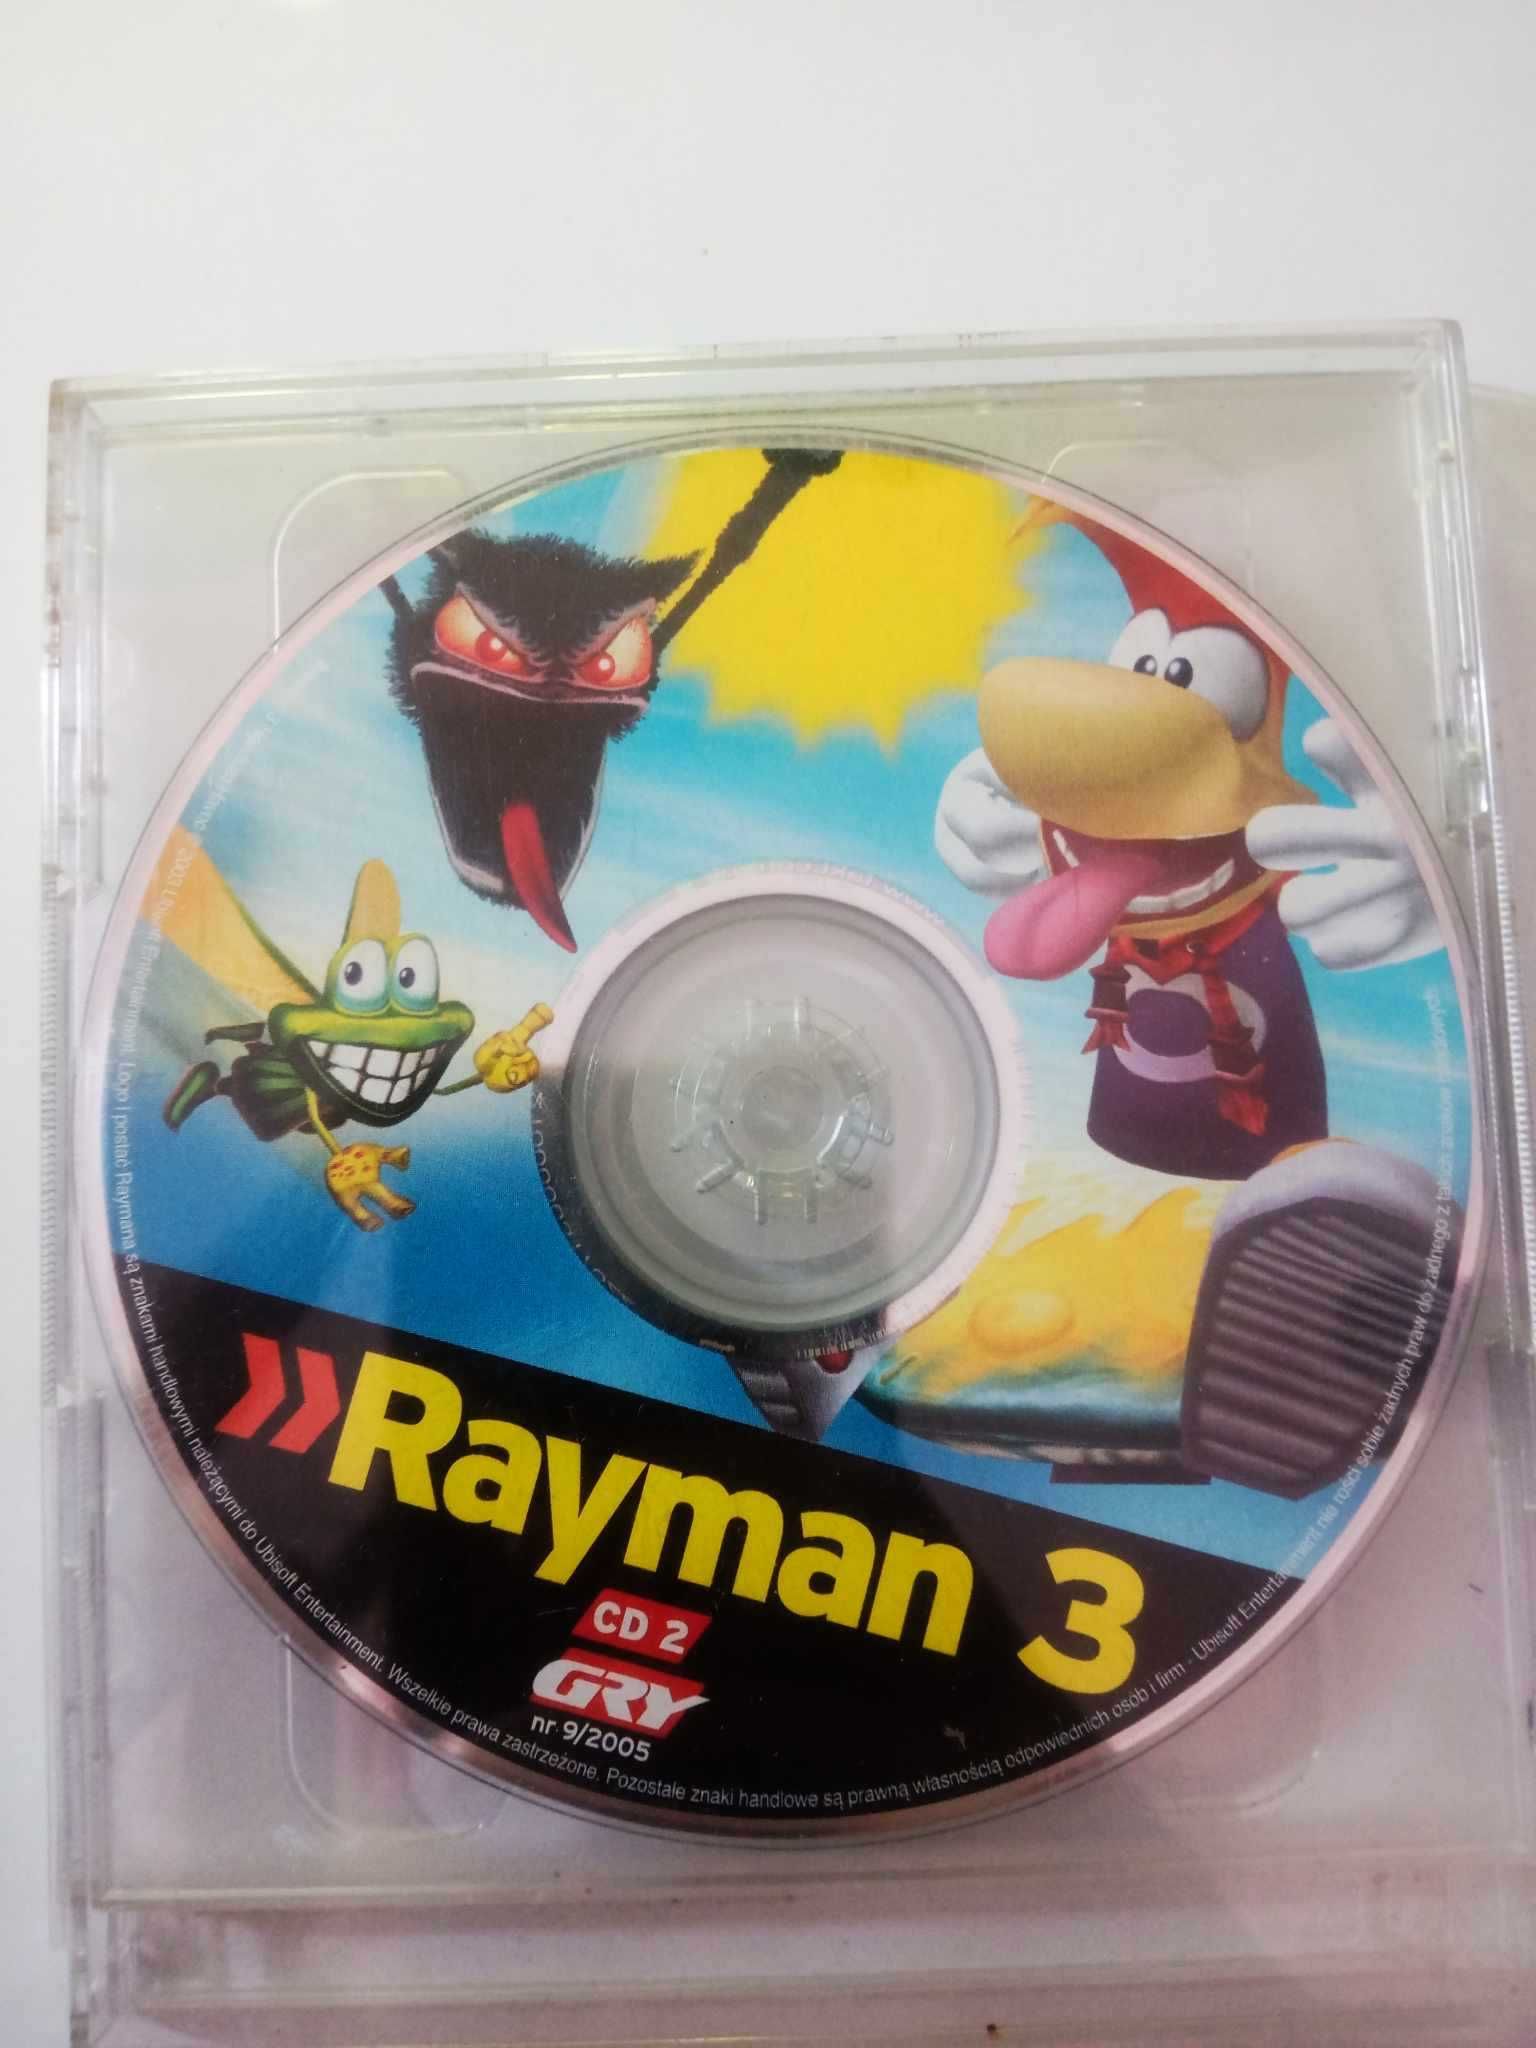 Rayman 3: Hoodlum Havoc PC